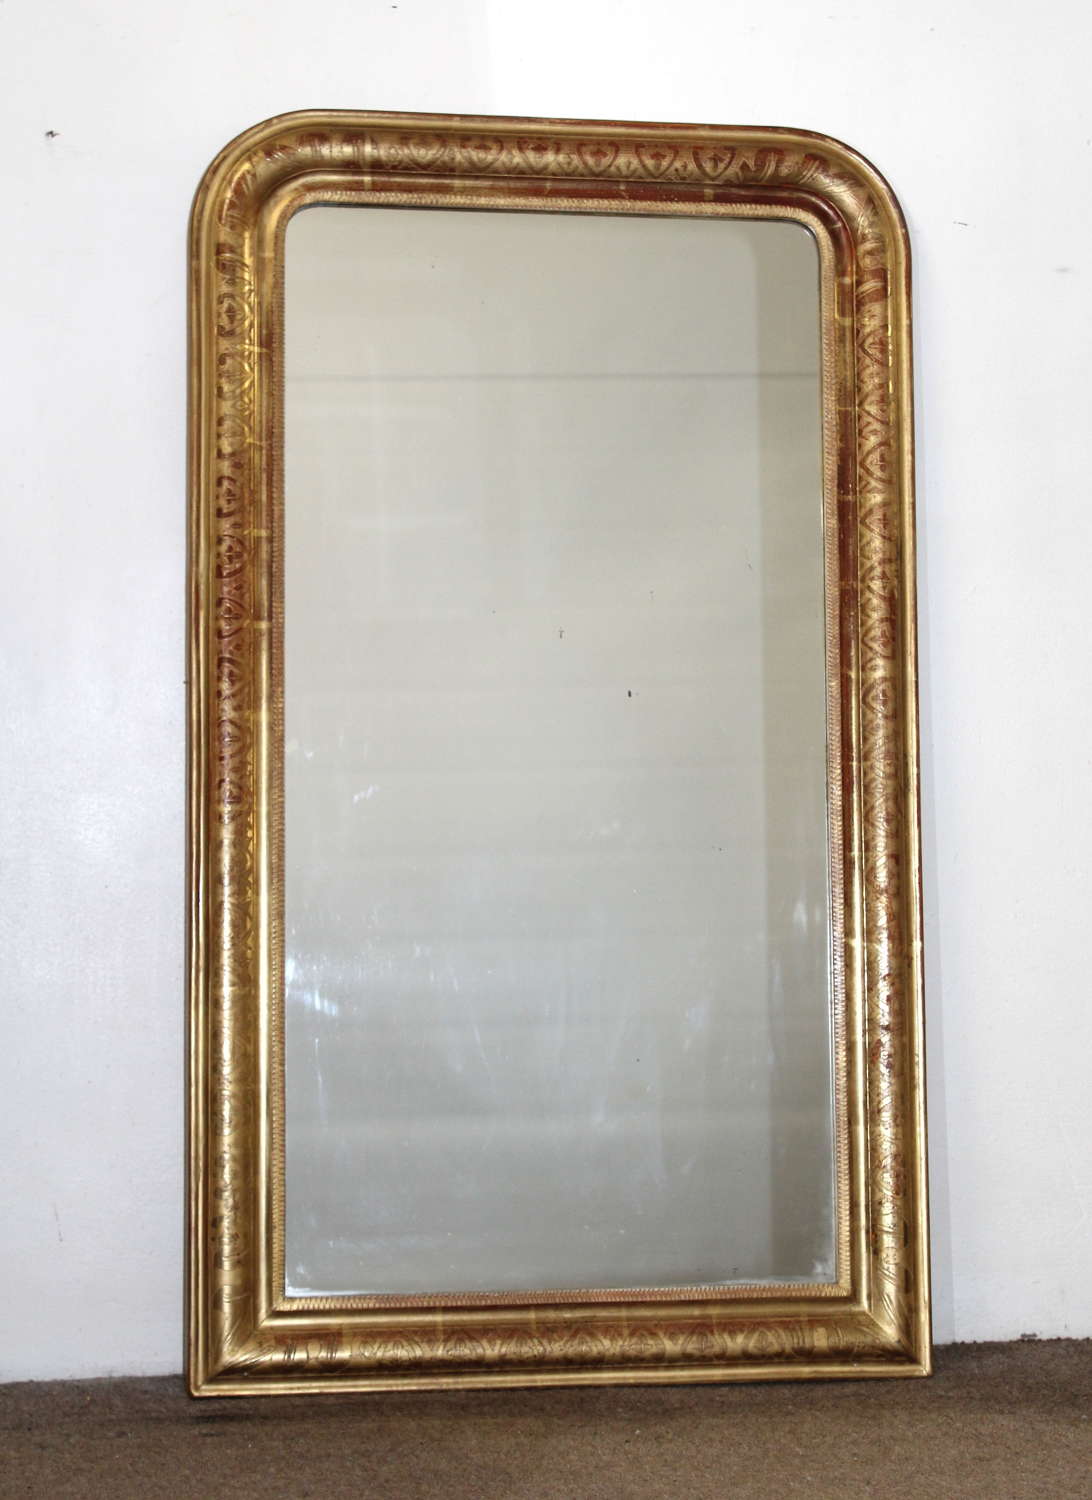 Narrow 19th century archtop mirror